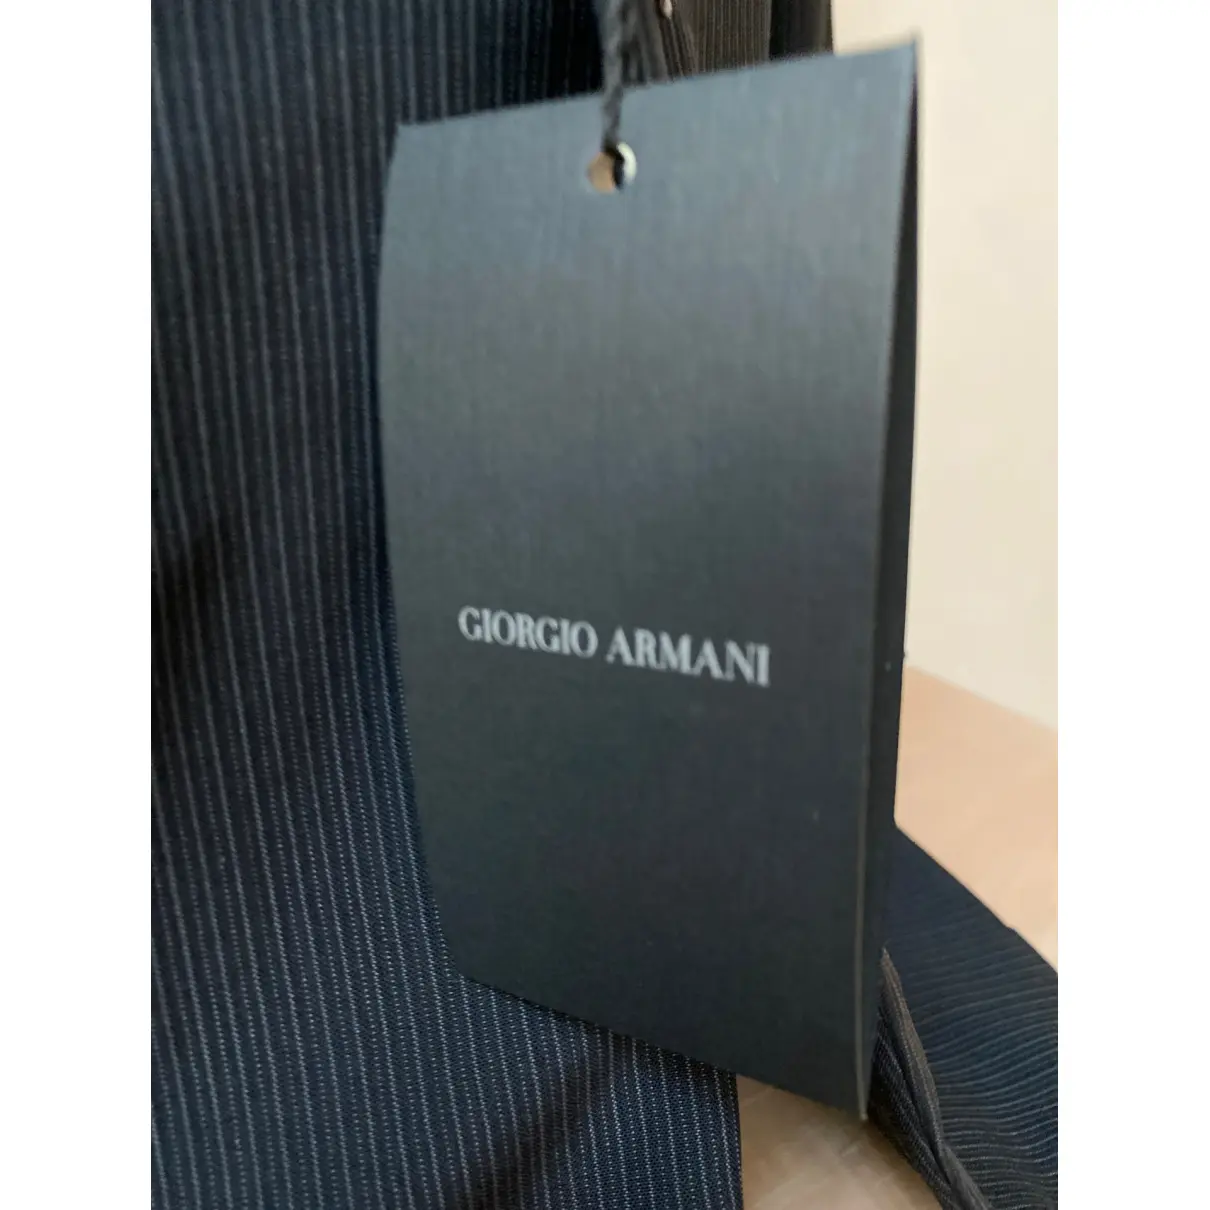 Buy Giorgio Armani Wool suit online